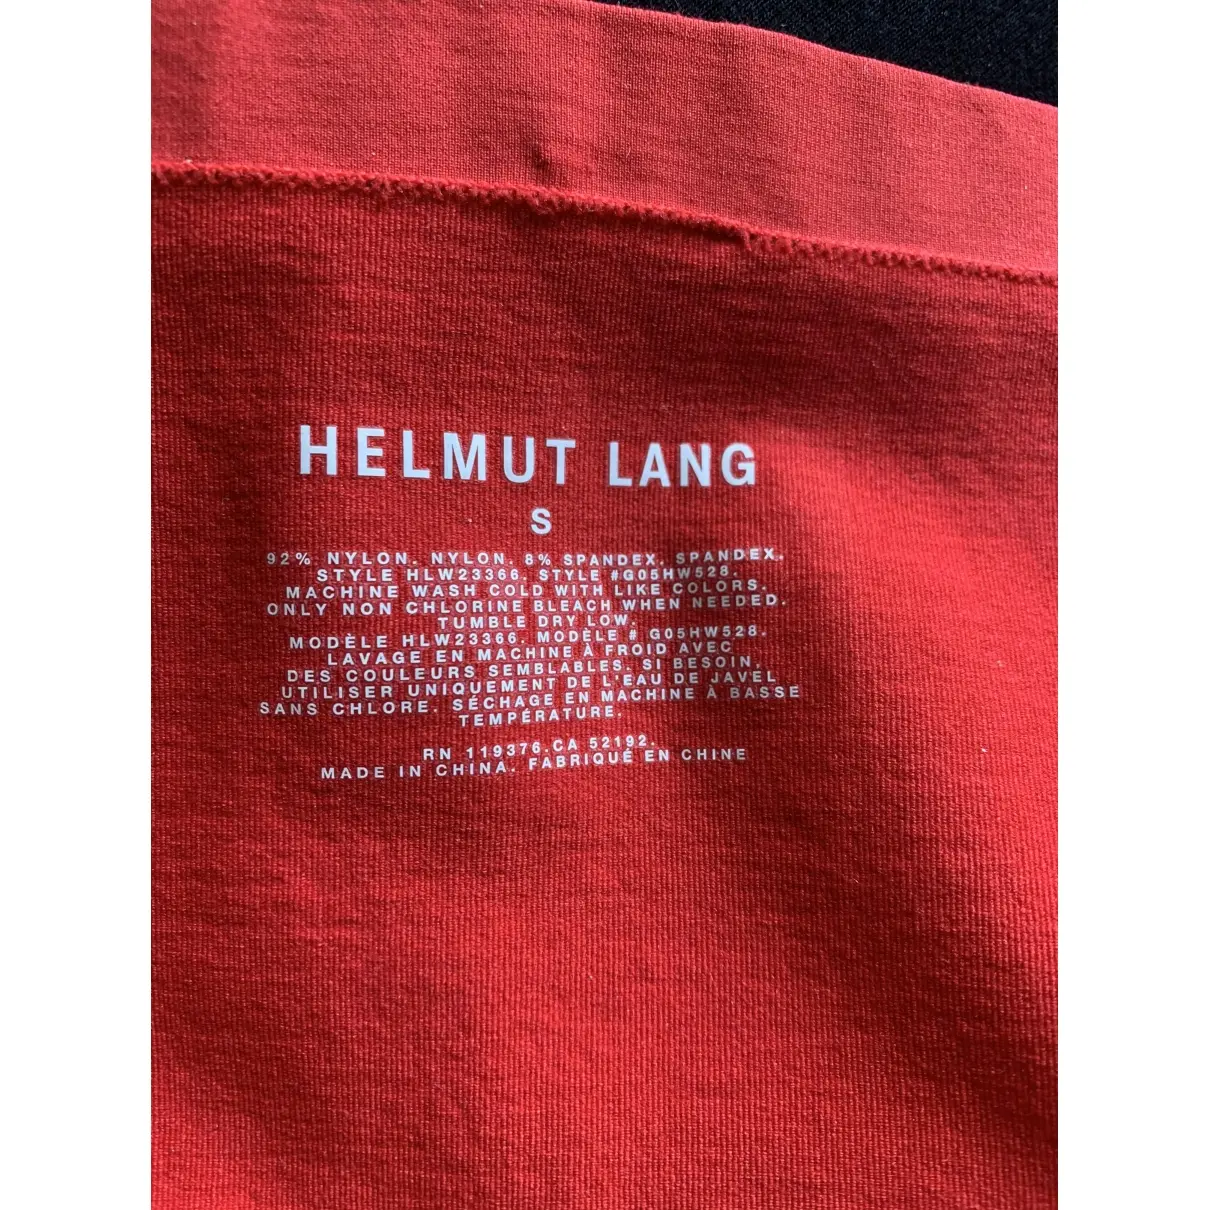 Buy Helmut Lang Blouse online